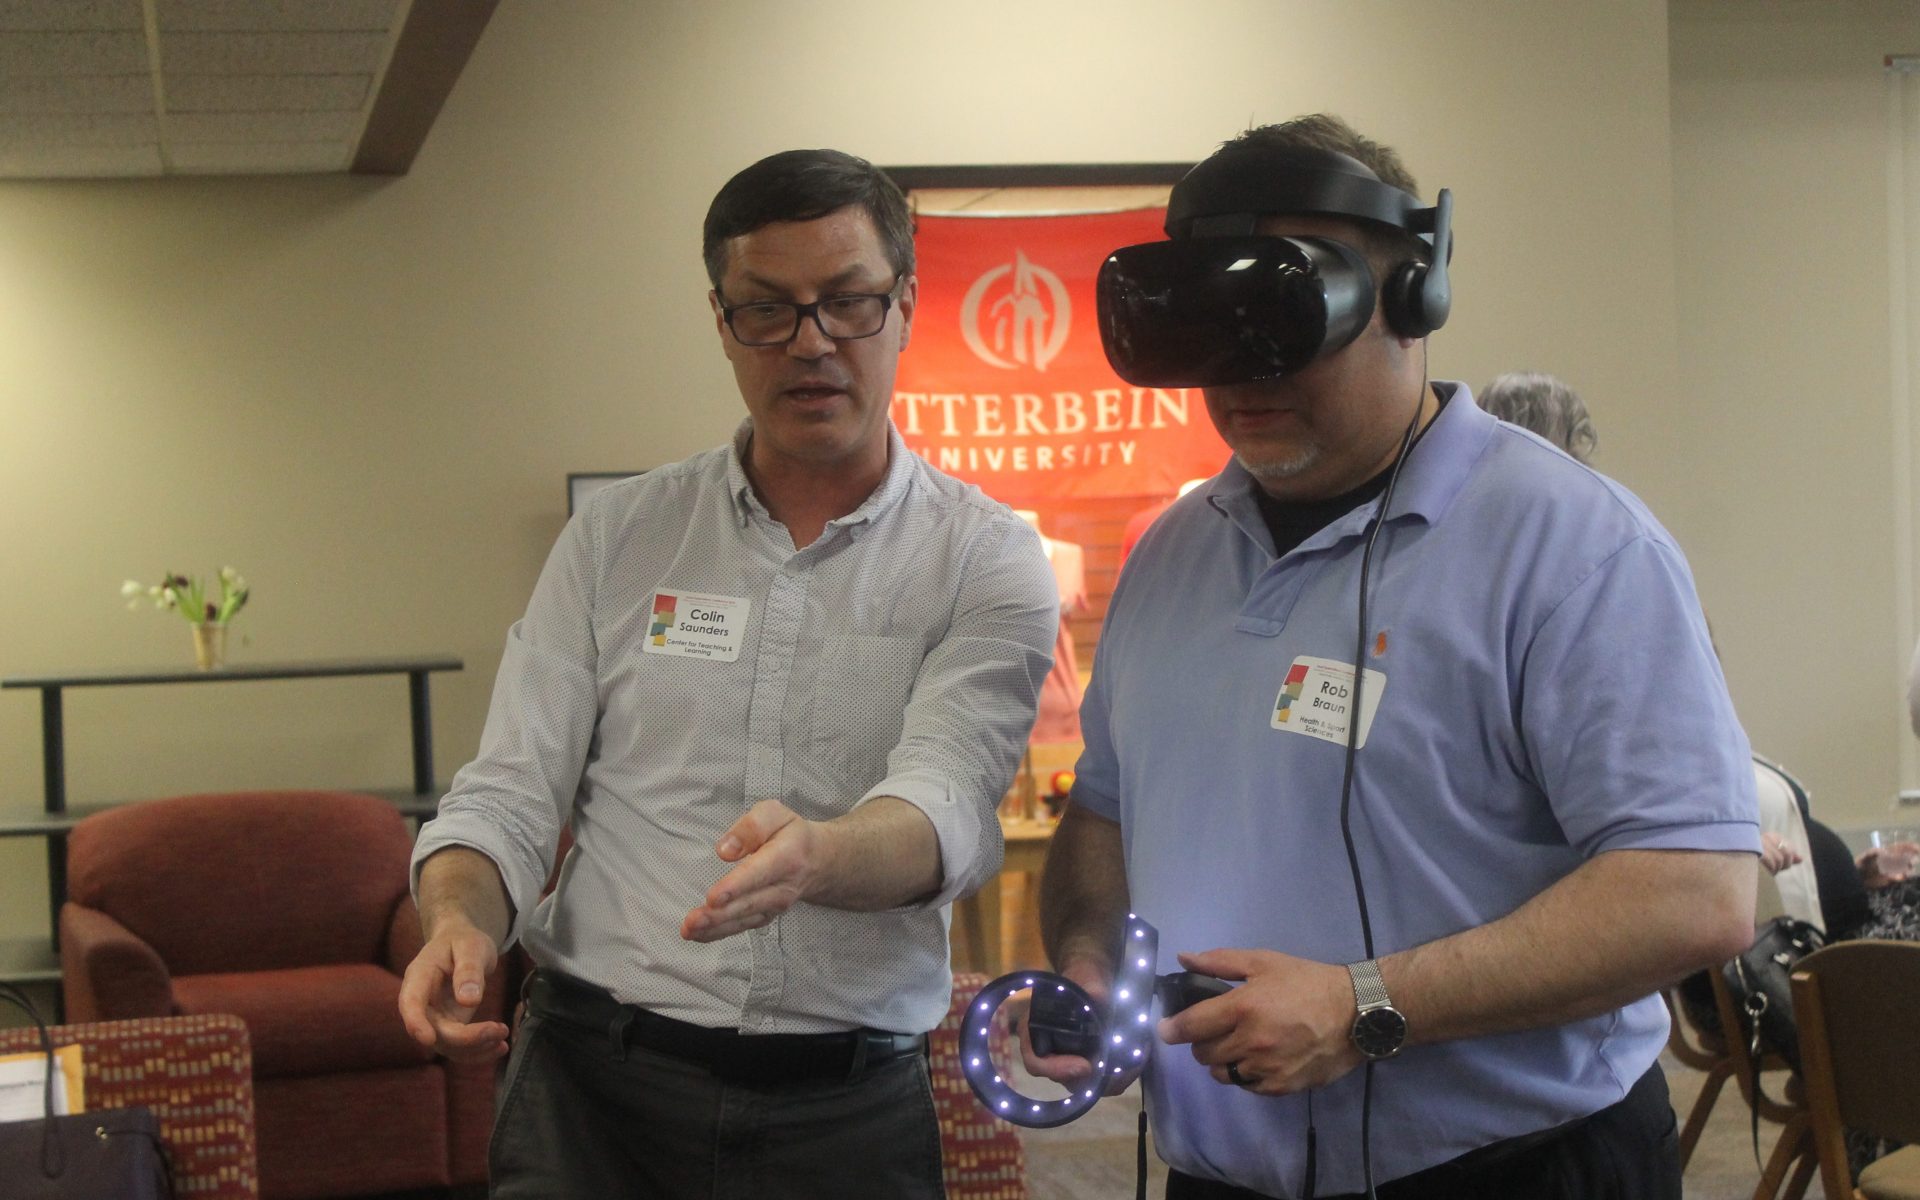 Virtual Reality Demonstration